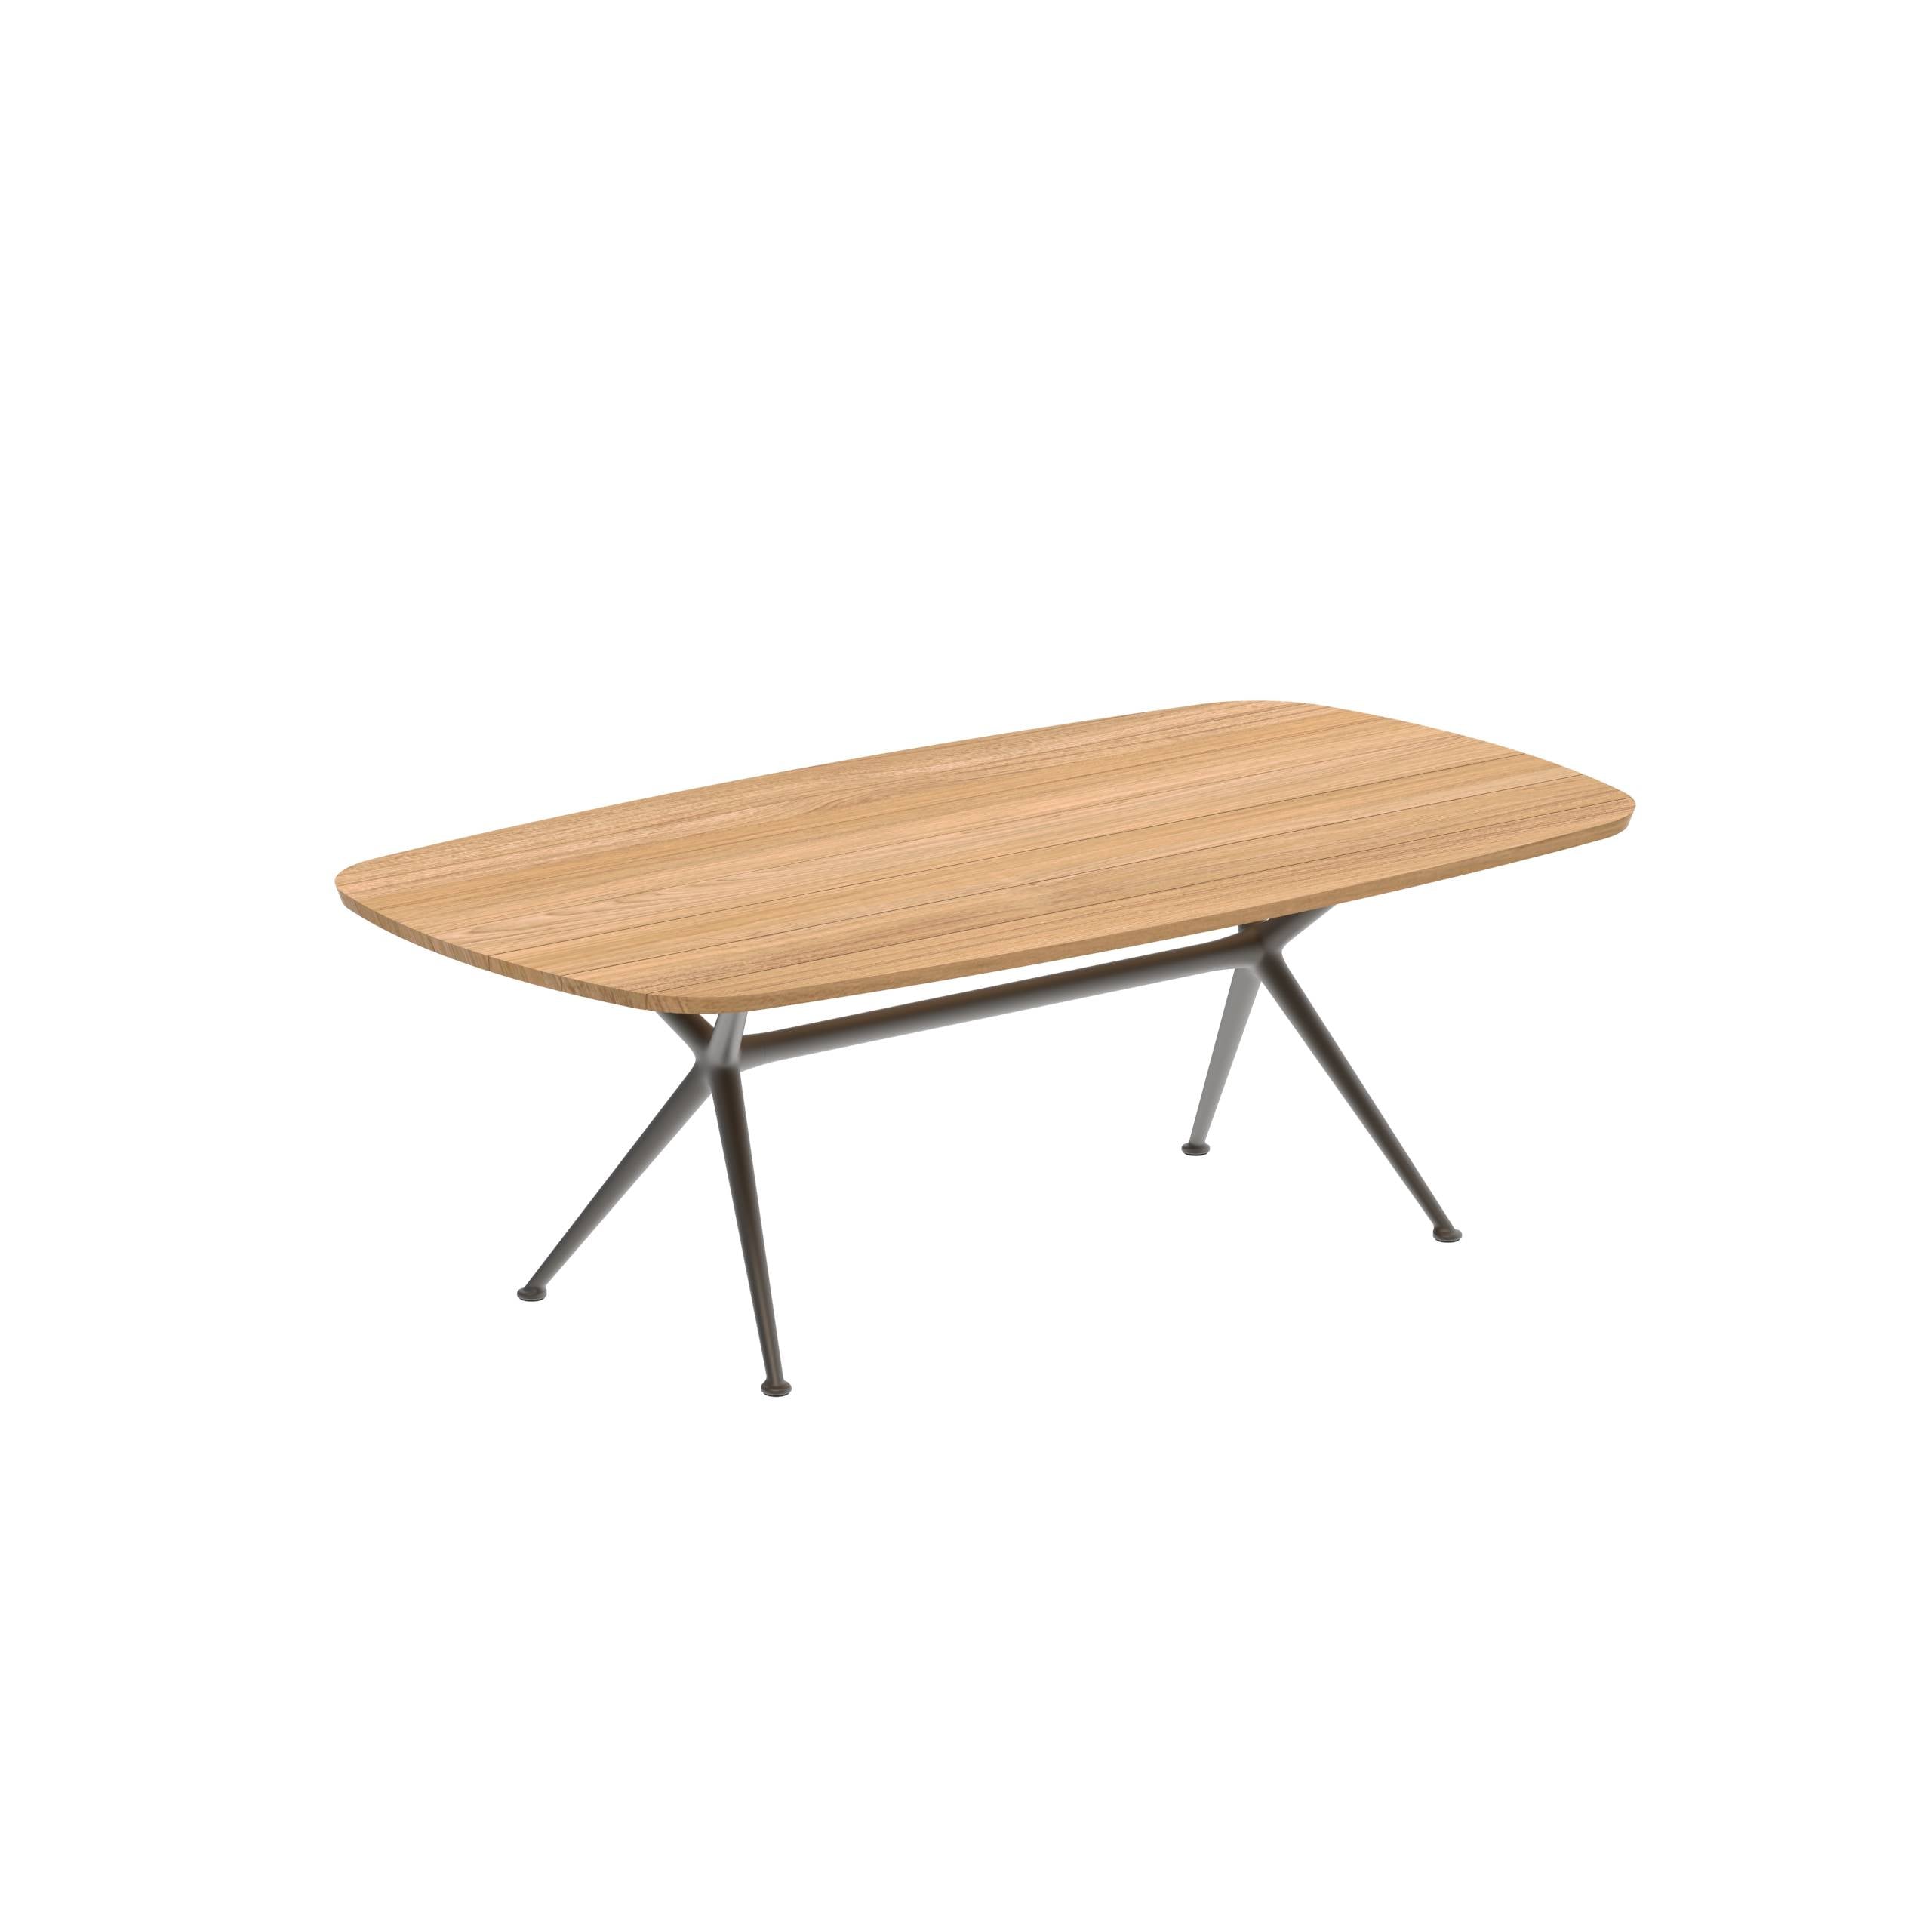 Exes Table 220x120cm Alu Legs Bronze - Teak Table Top